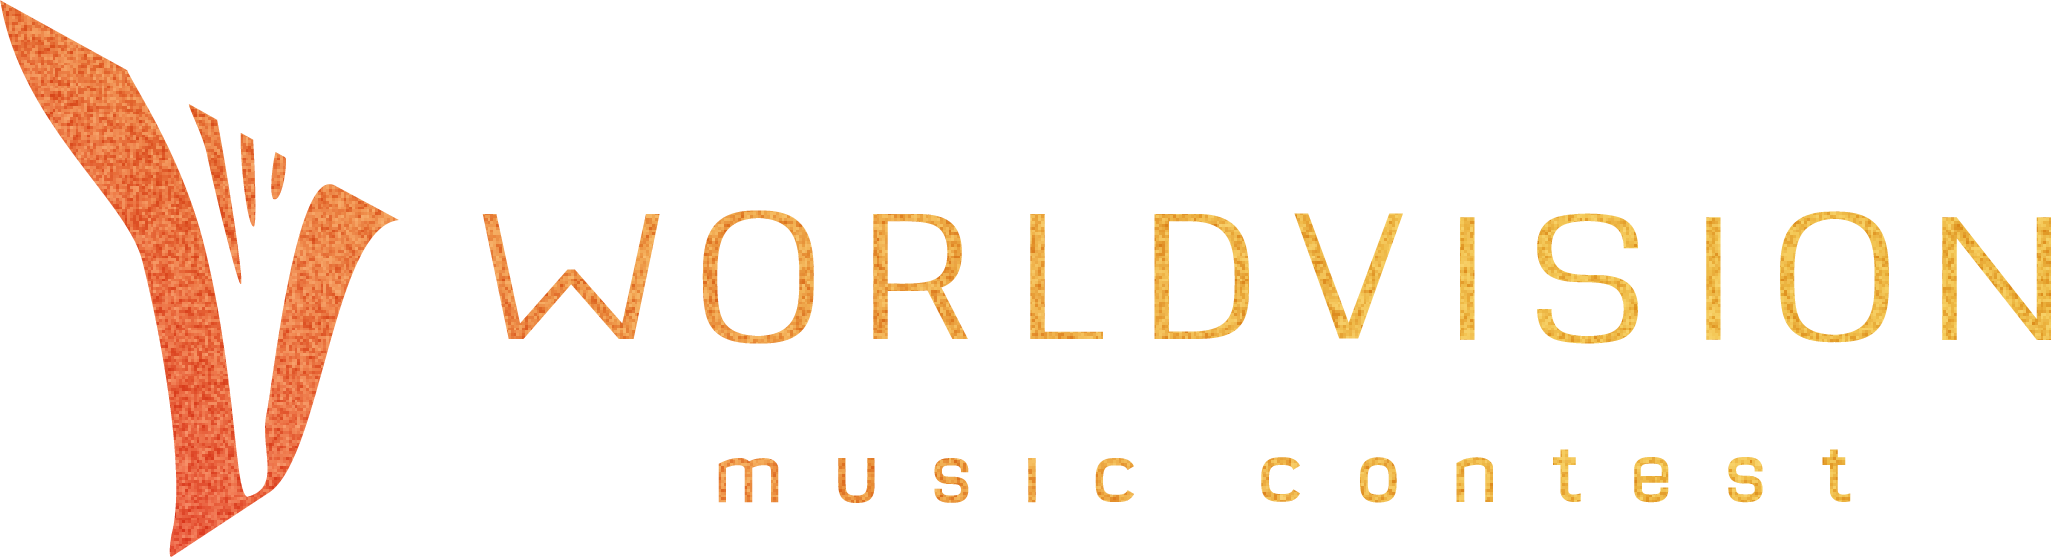 Worldvision Contest logo